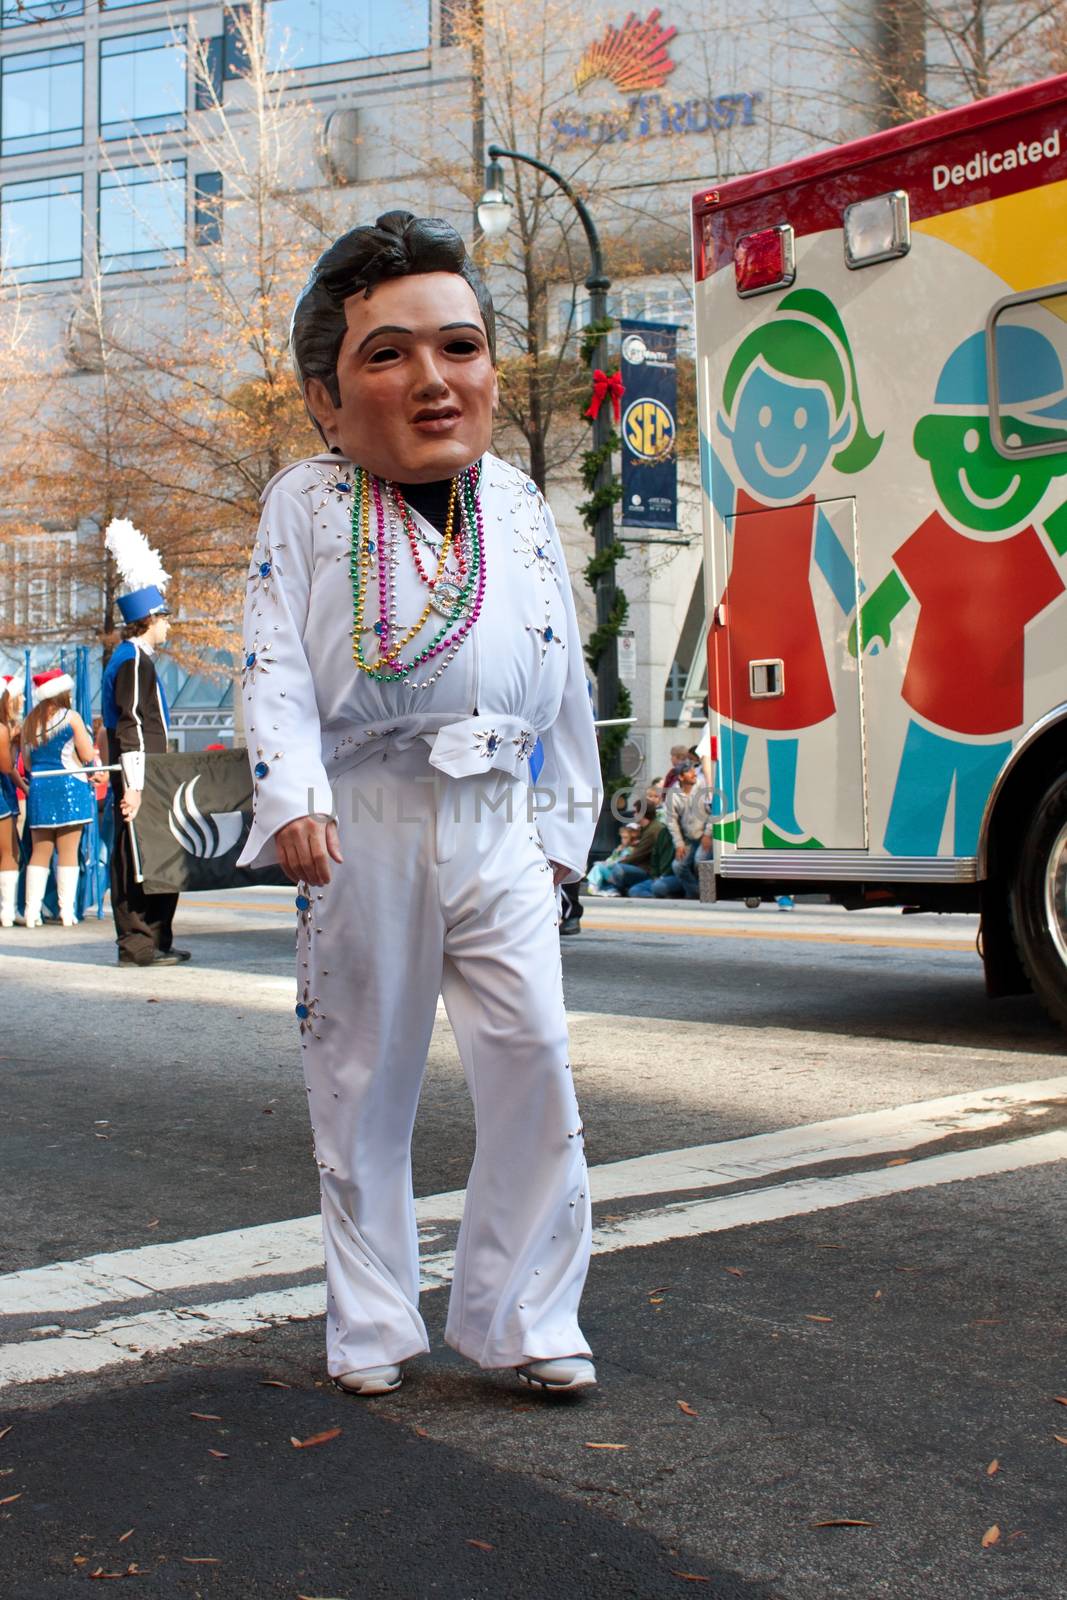 Atlanta, GA, USA - December 1, 2012:  An Elvis "bobblehead" character entertains spectators at the annual Atlanta Christmas parade in downtown Atlanta.